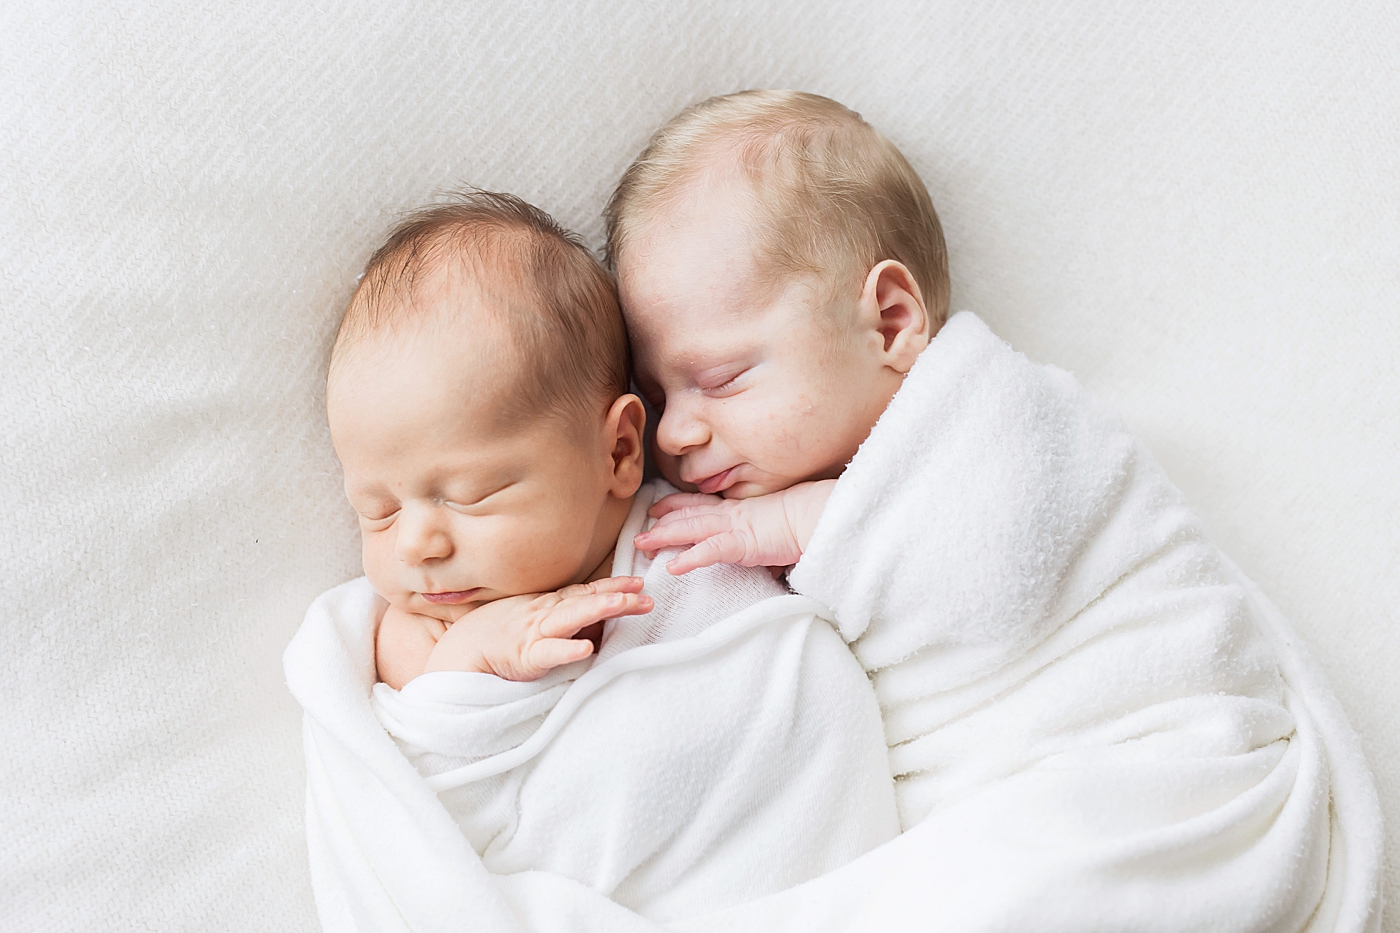 Twin boys' newborn session in Houston studio with Fresh Light Photography.